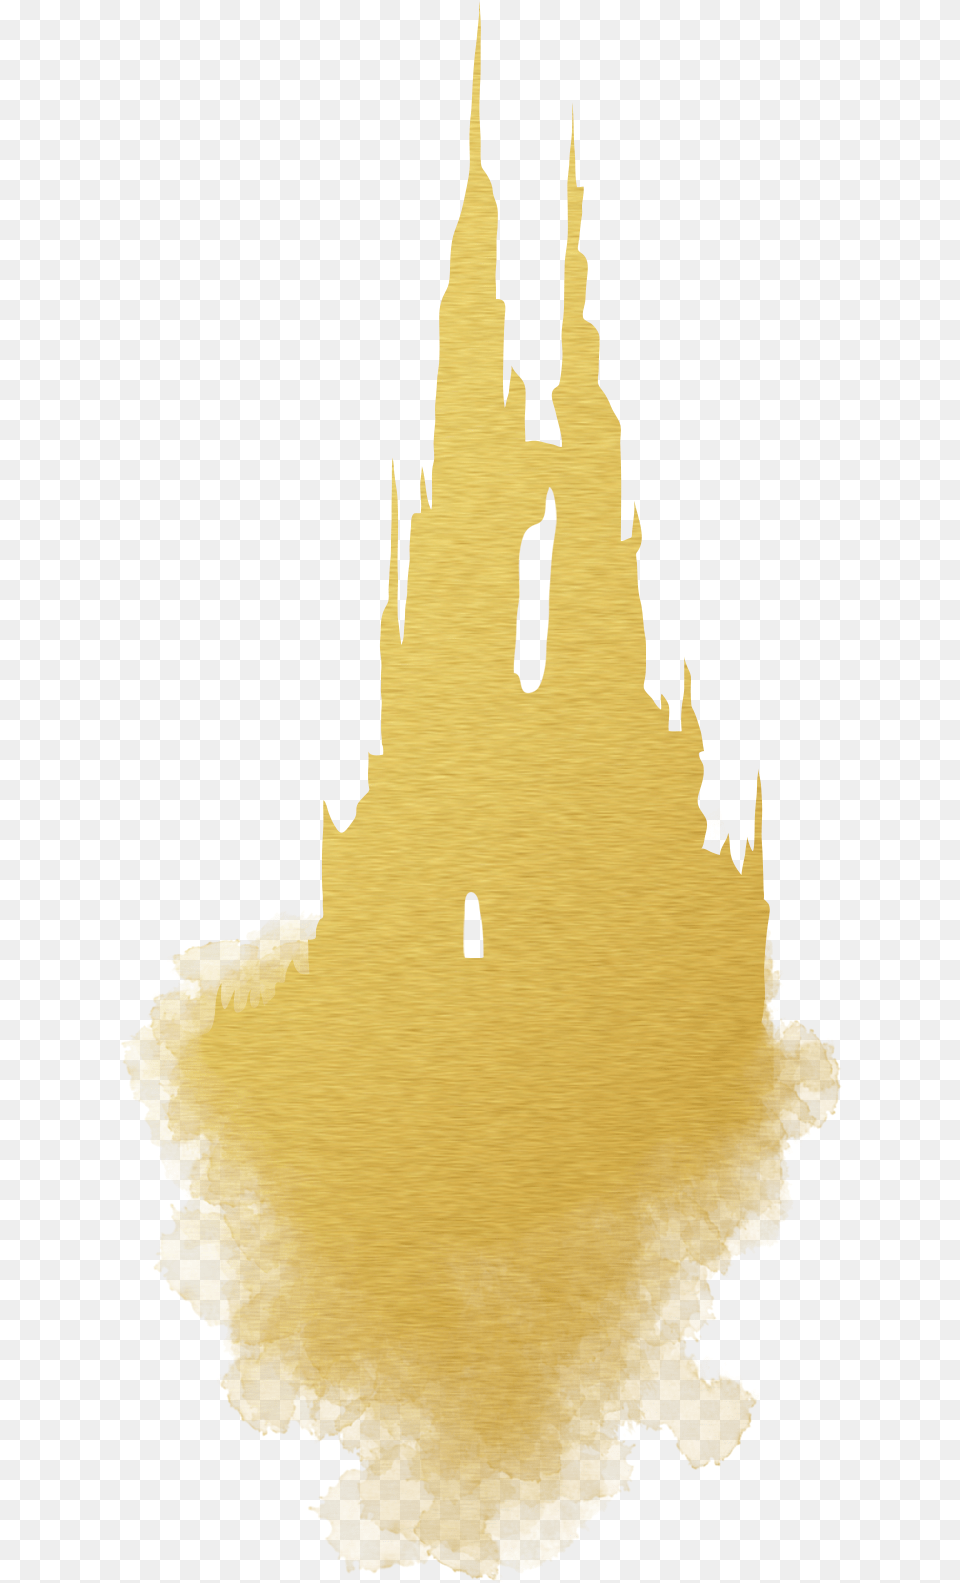 Castle Gold Foil Illustration, Plant, Tree, Fire, Flame Png Image